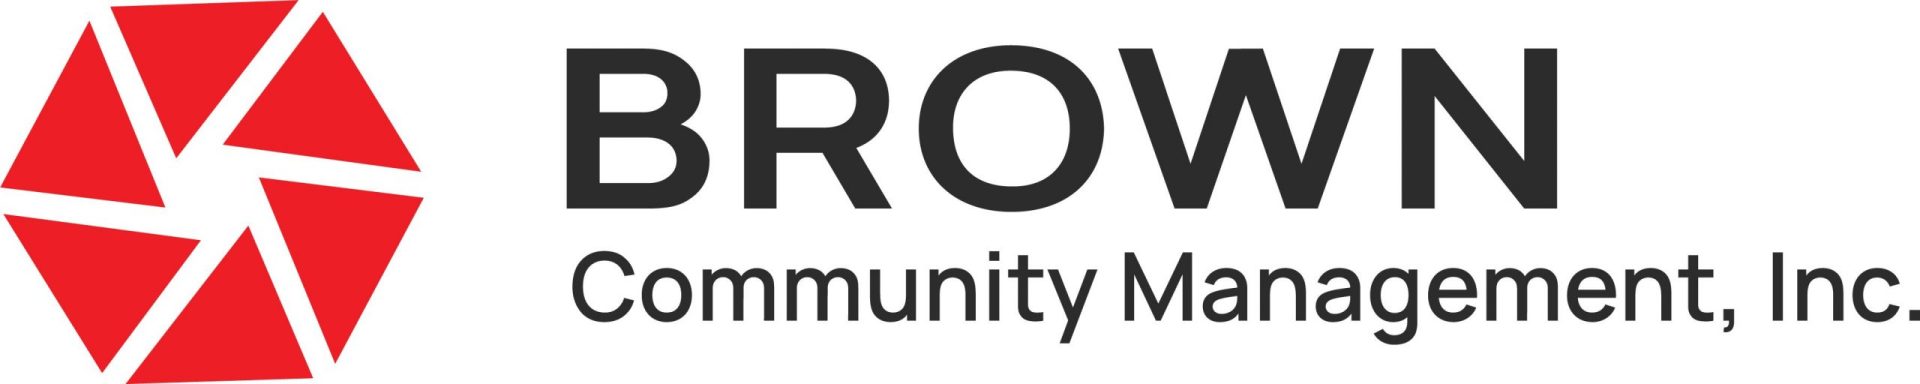 Brown Community Management, Inc.